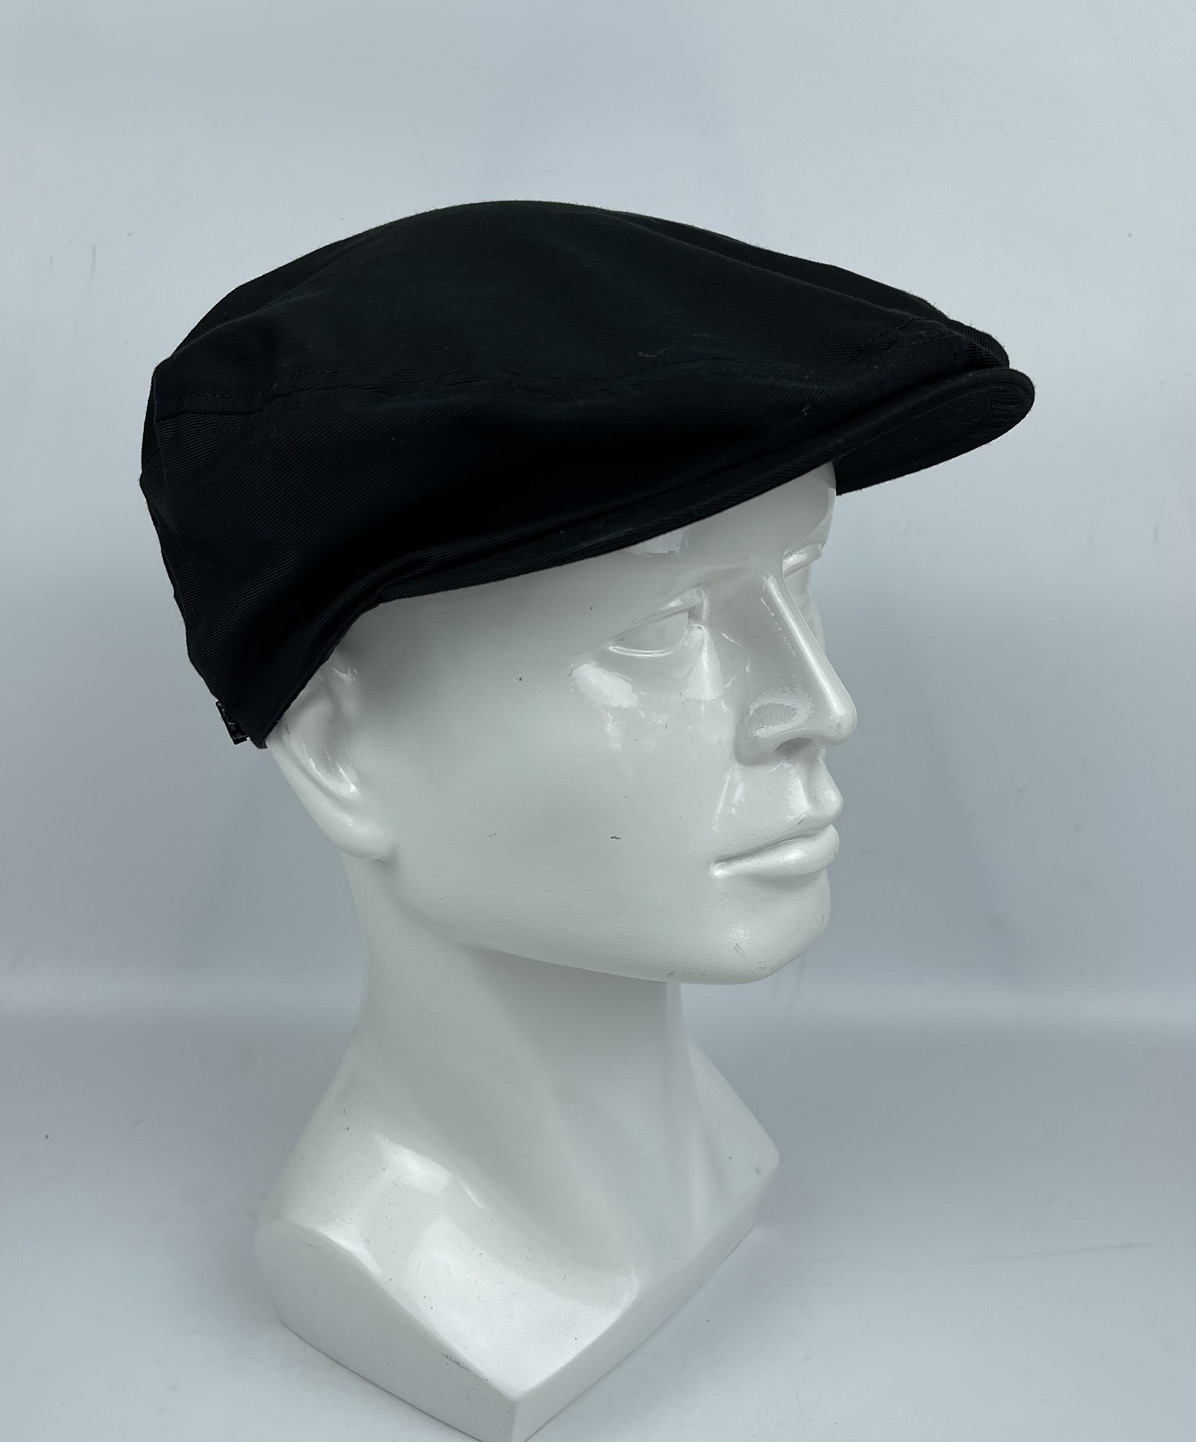 montblanc hat - 1